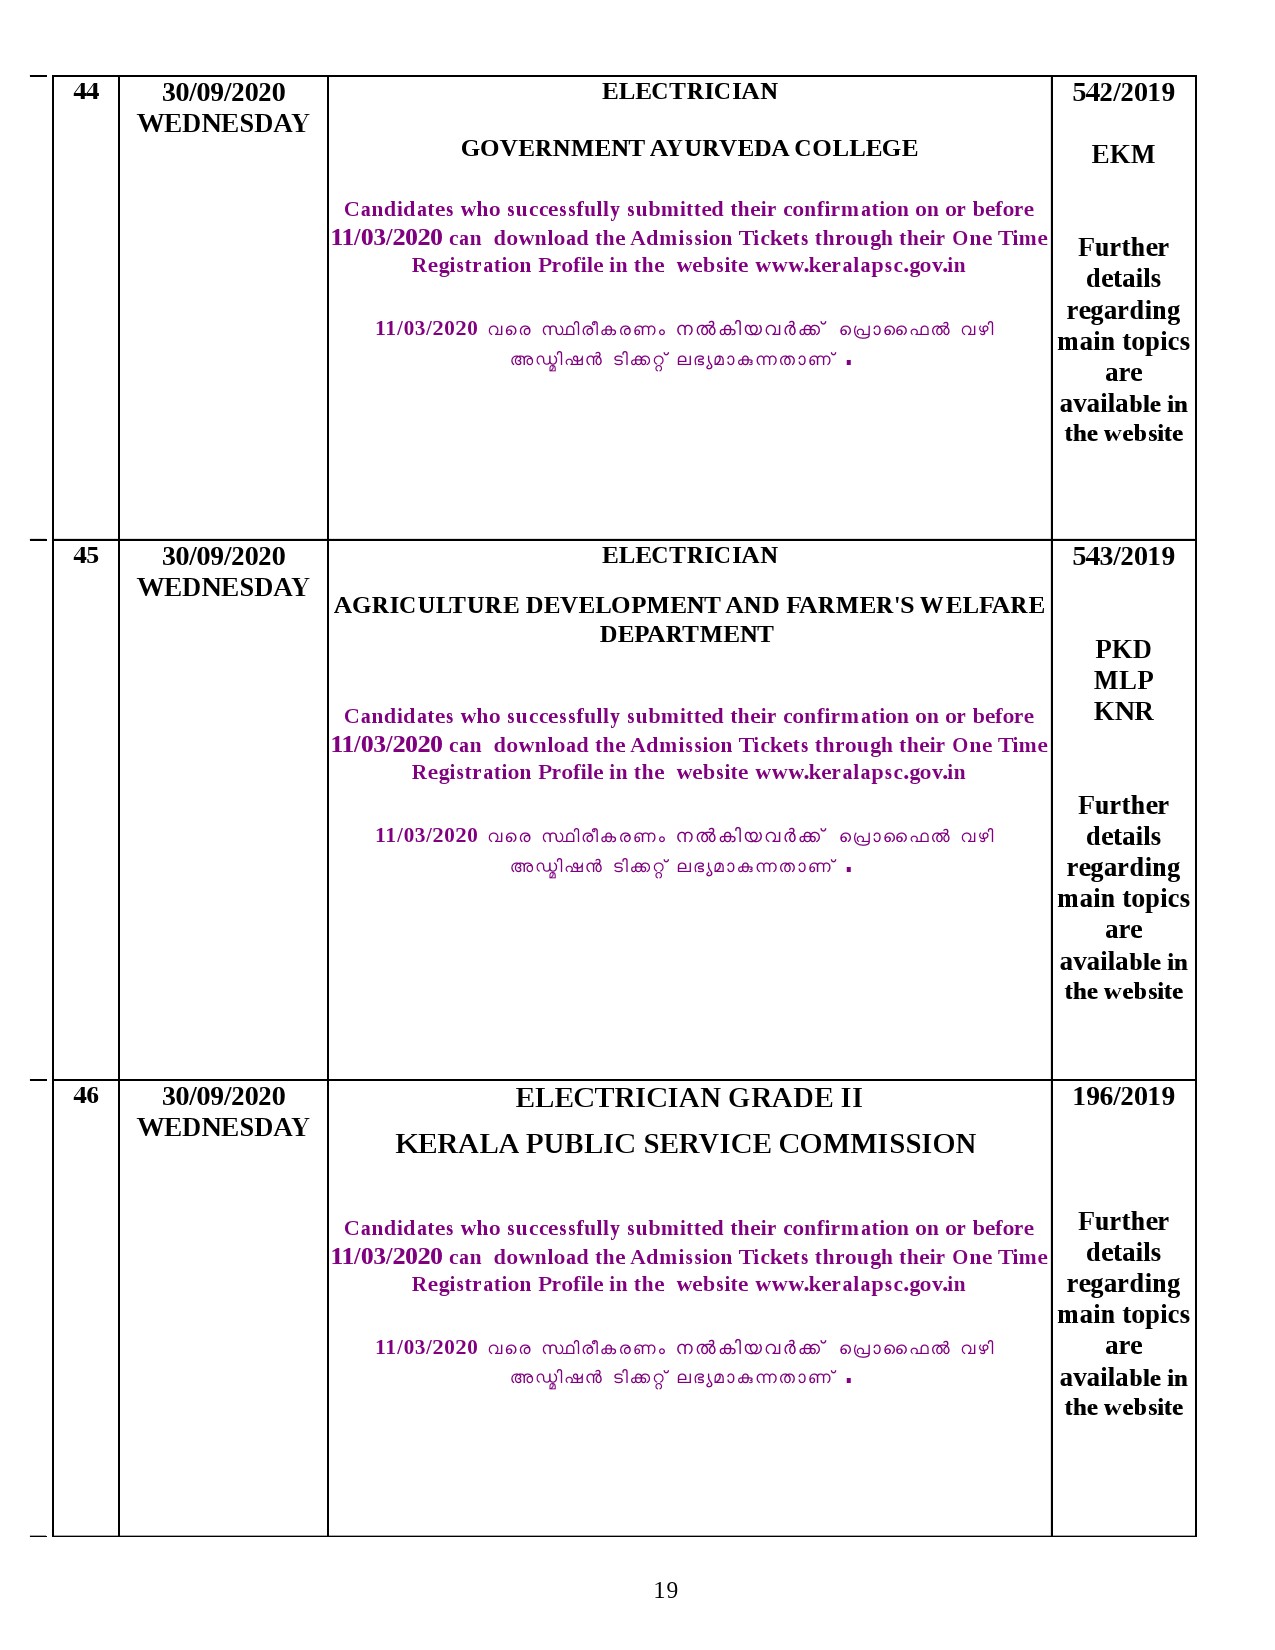 Kerala PSC Exam Calendar September 2020 - Notification Image 19